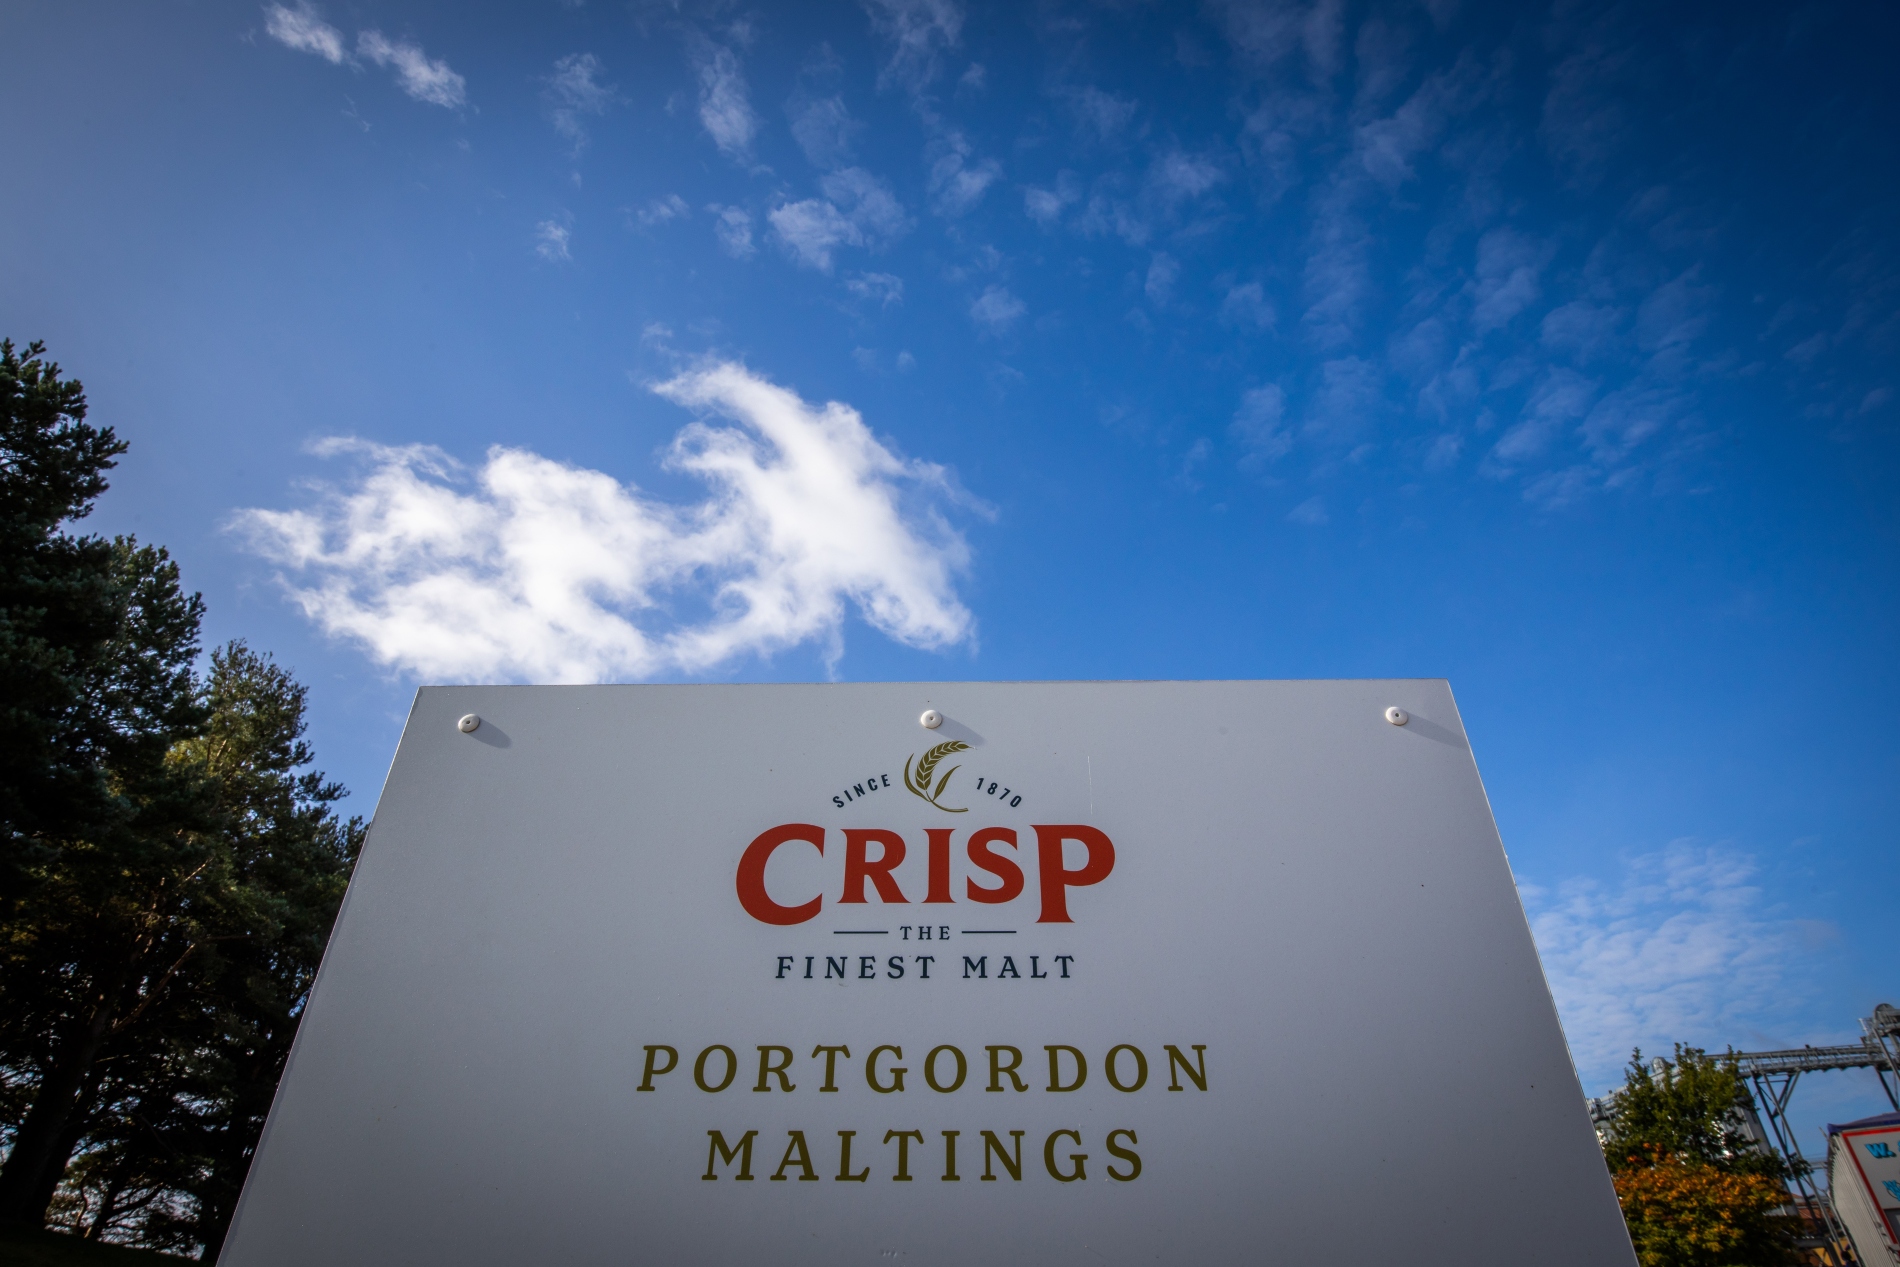 The Crisp Malt sign at the Portgordon Maltings in Scotland